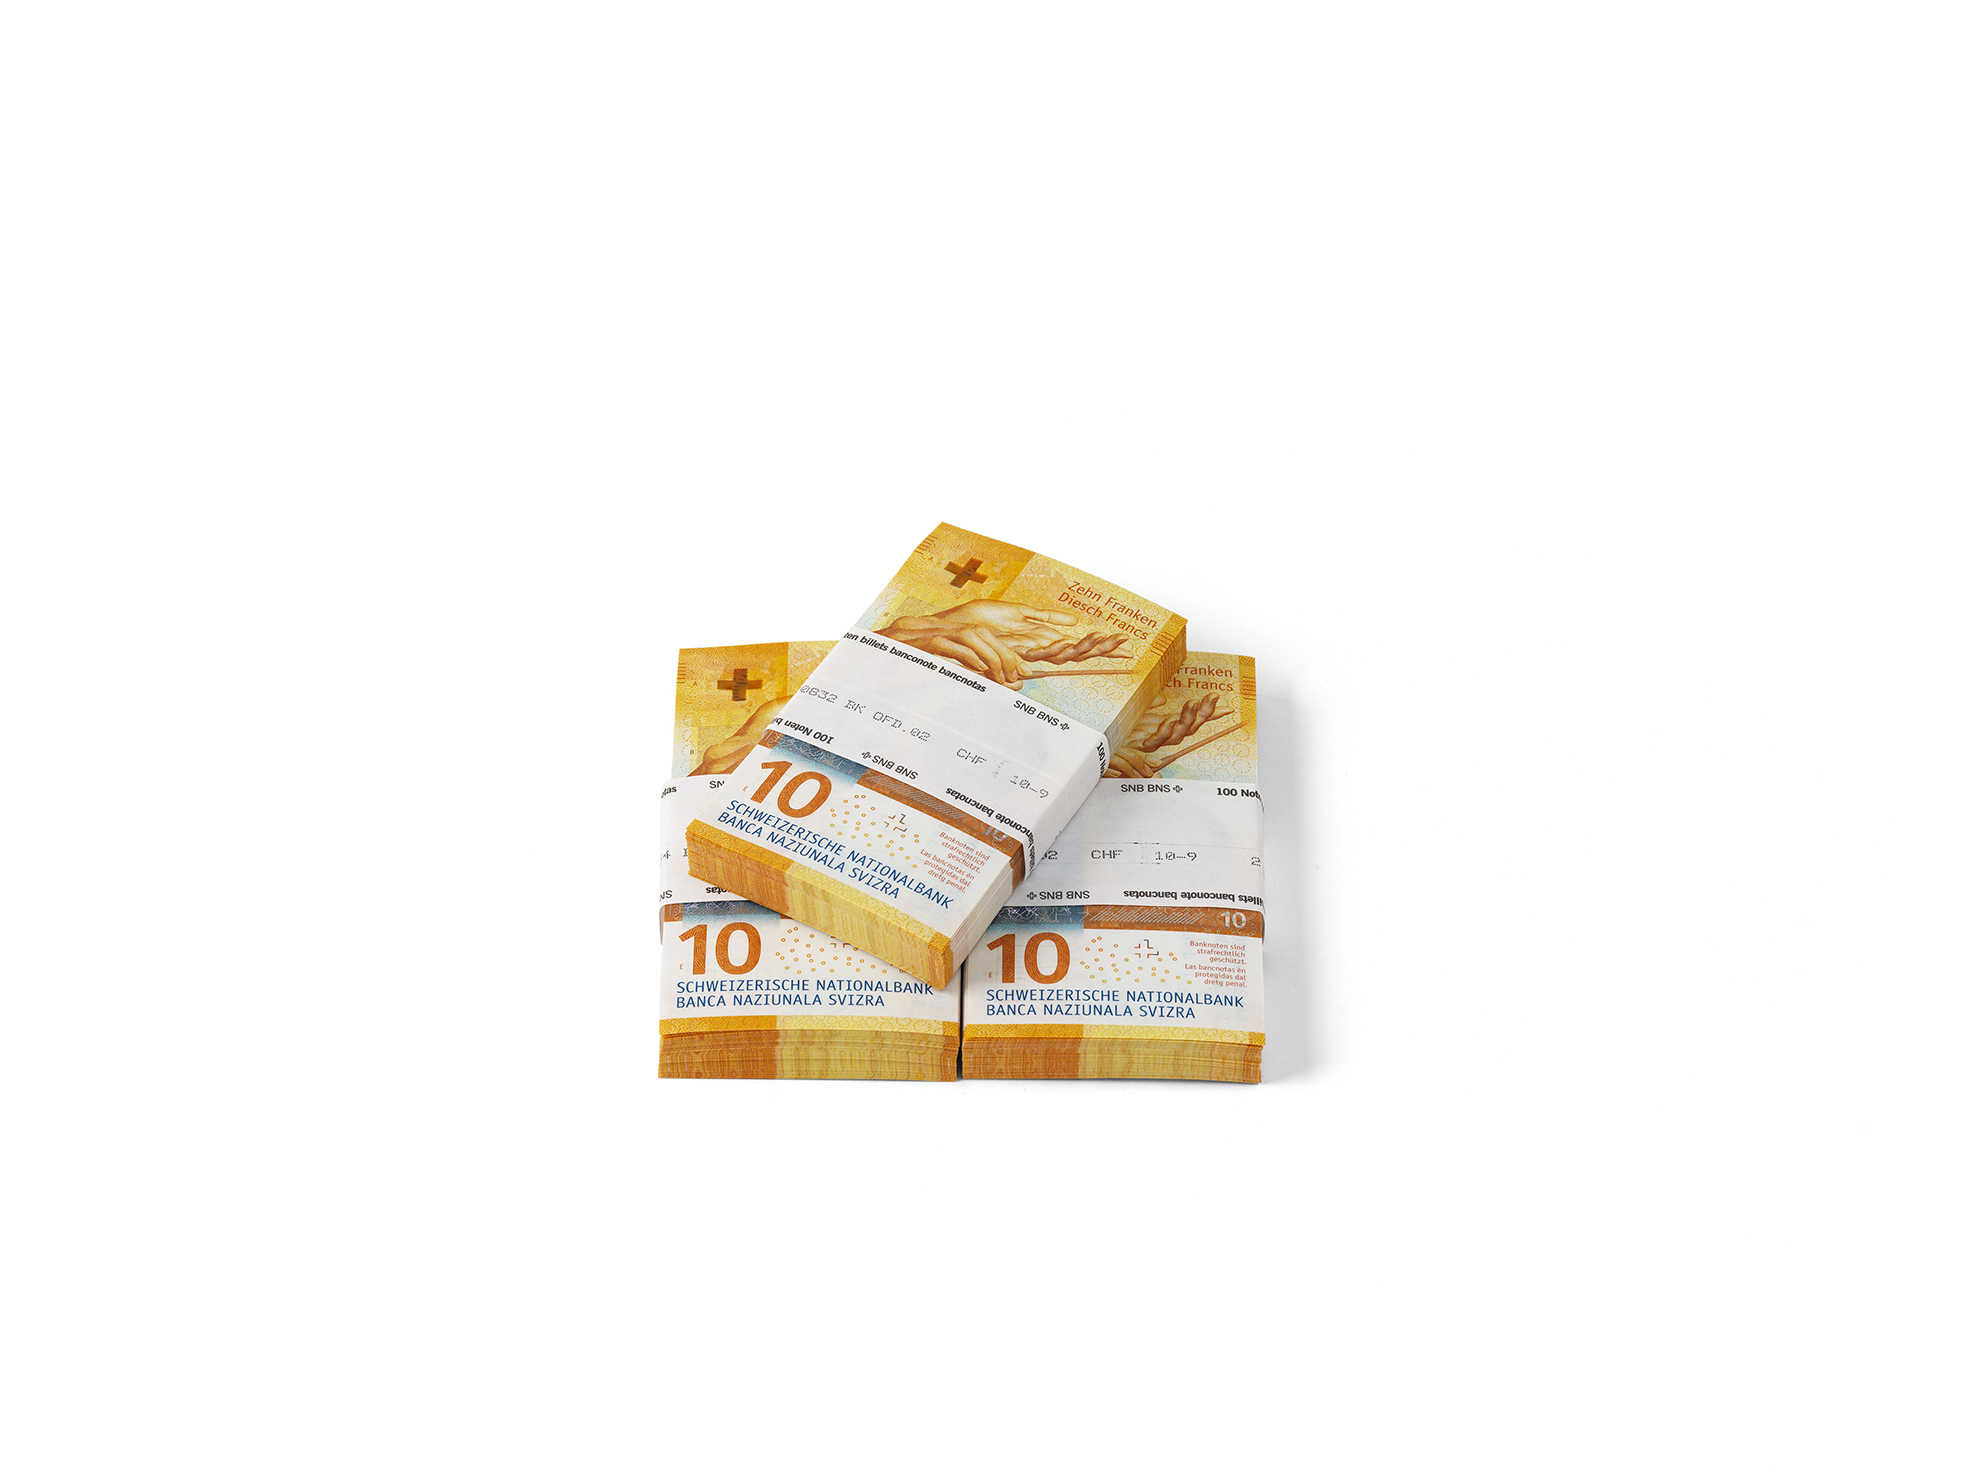 Bundles of 10-franc notes (front view)